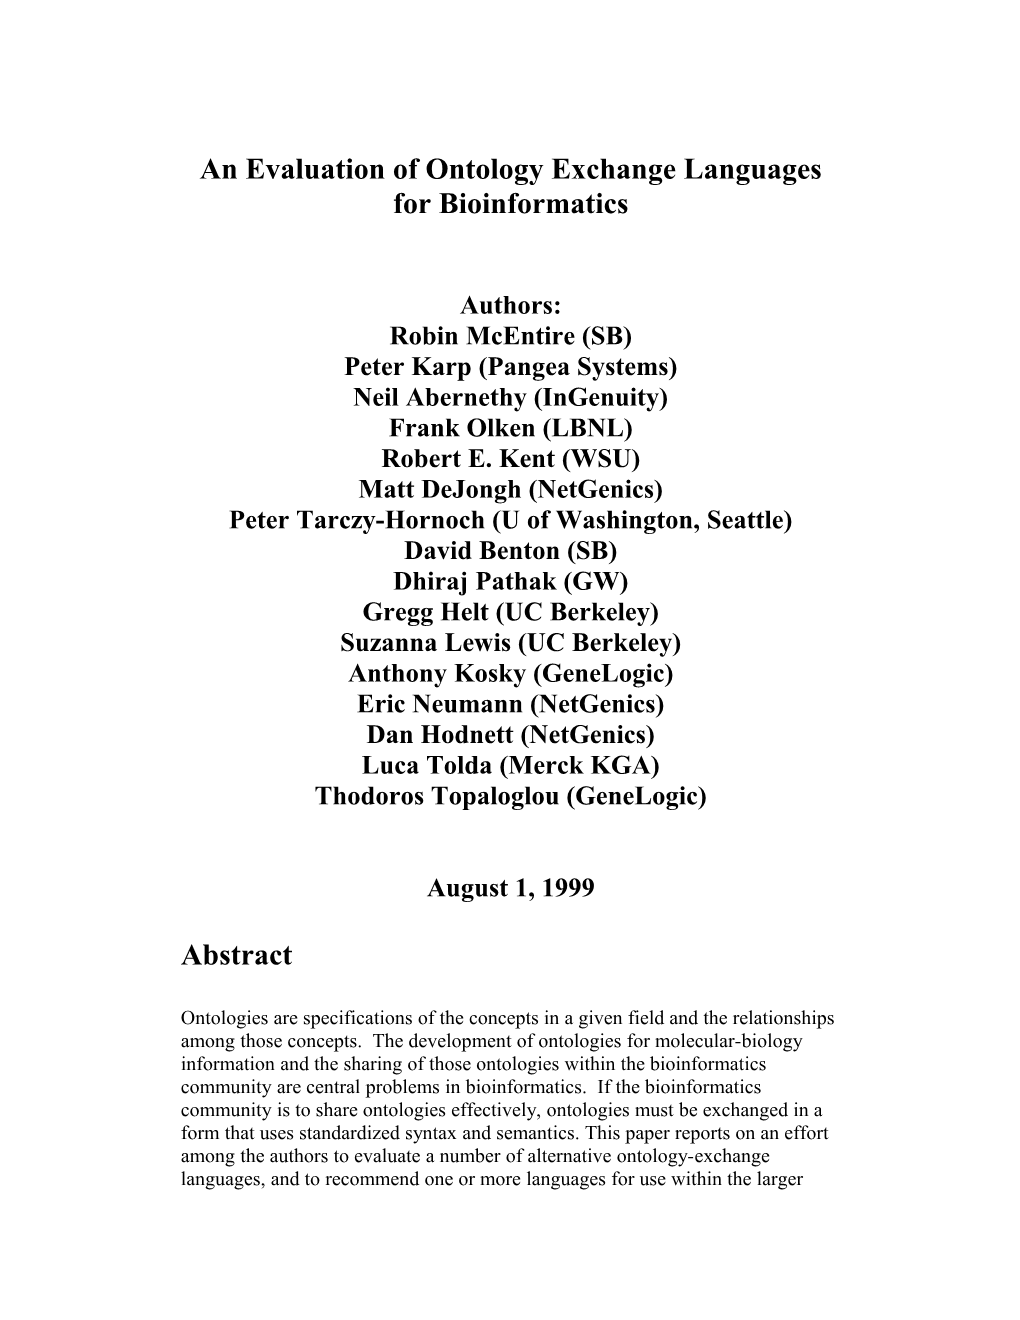 Ontology Exchange Languages for Bioinformatics